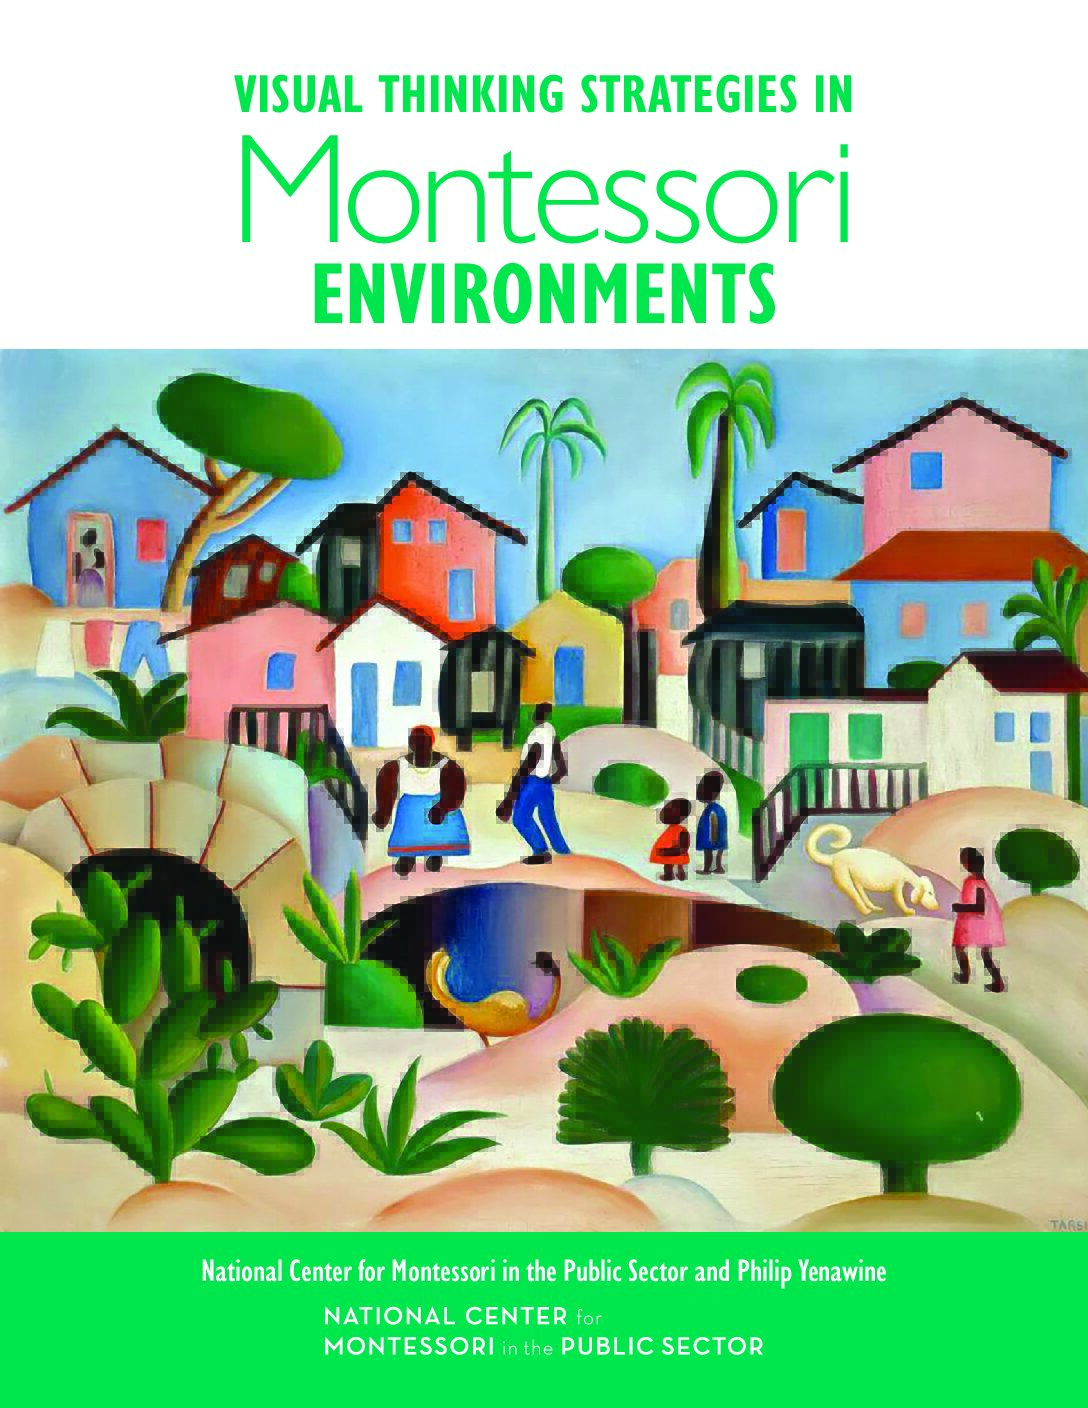 Book Review: VTS in Montessori Environments